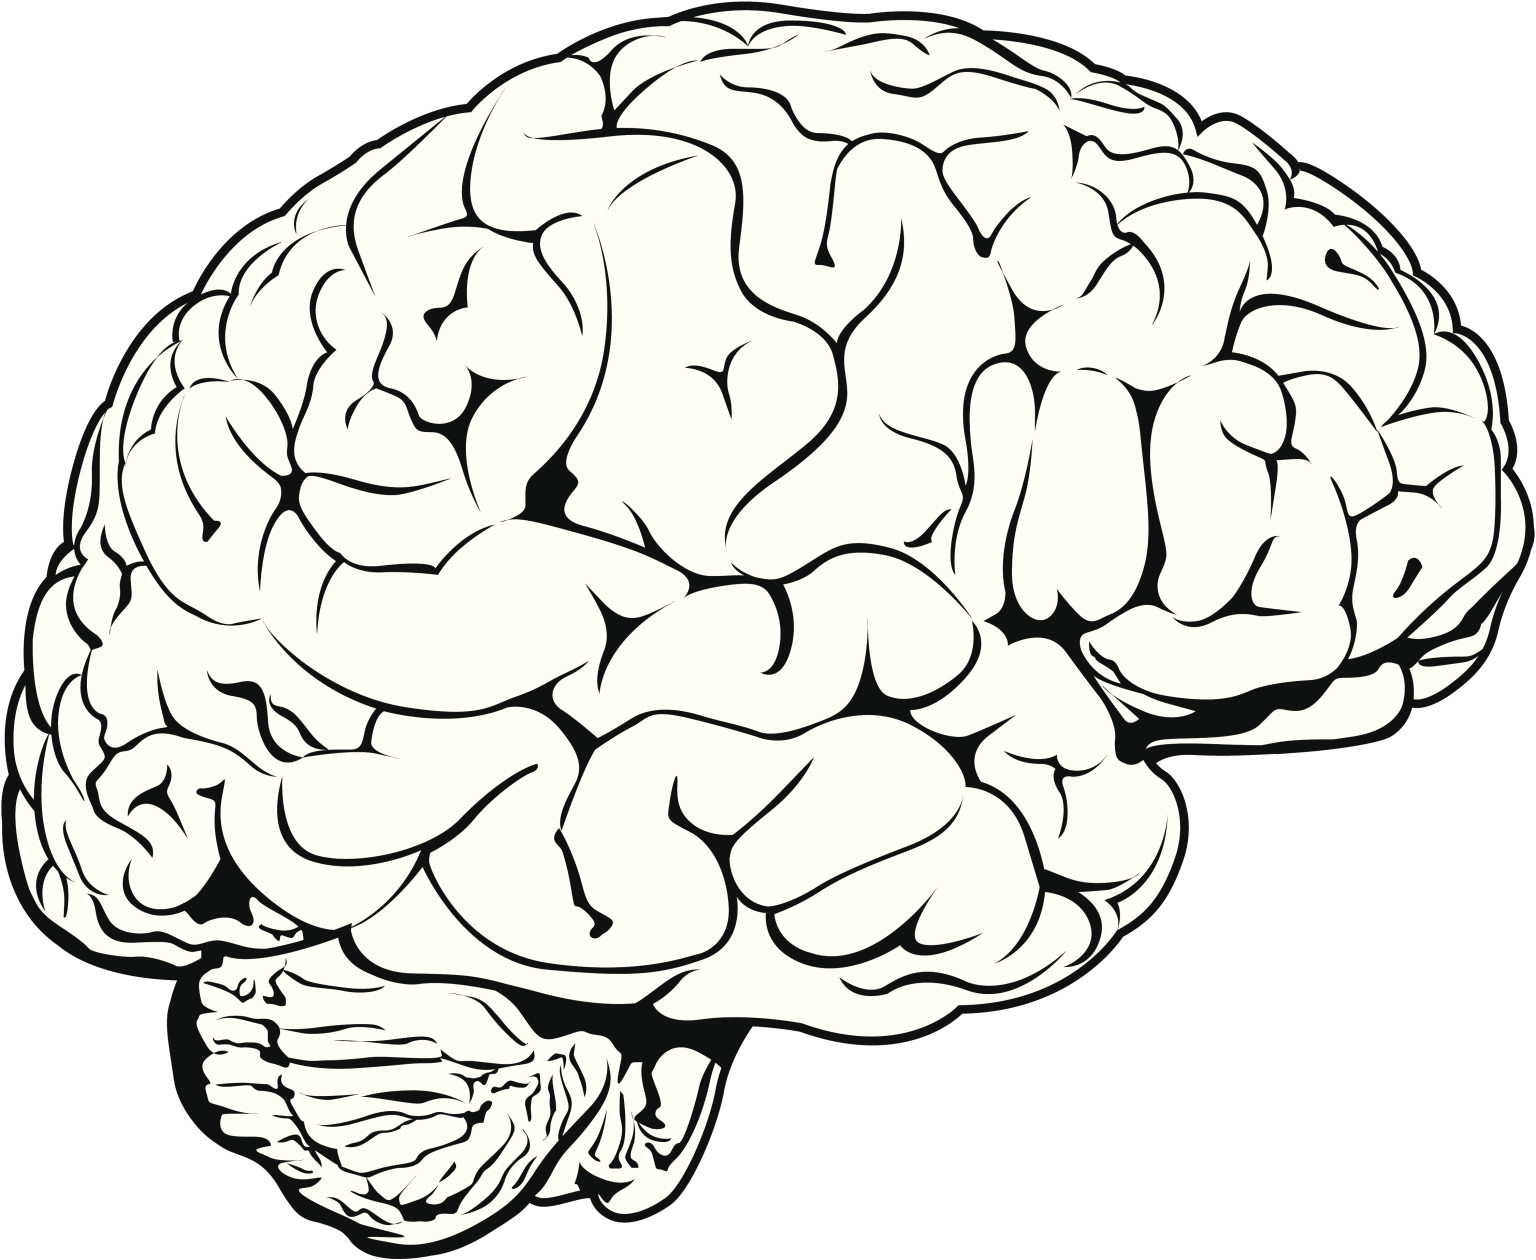 Brain download. Мозг рисунок. Мозг контур.